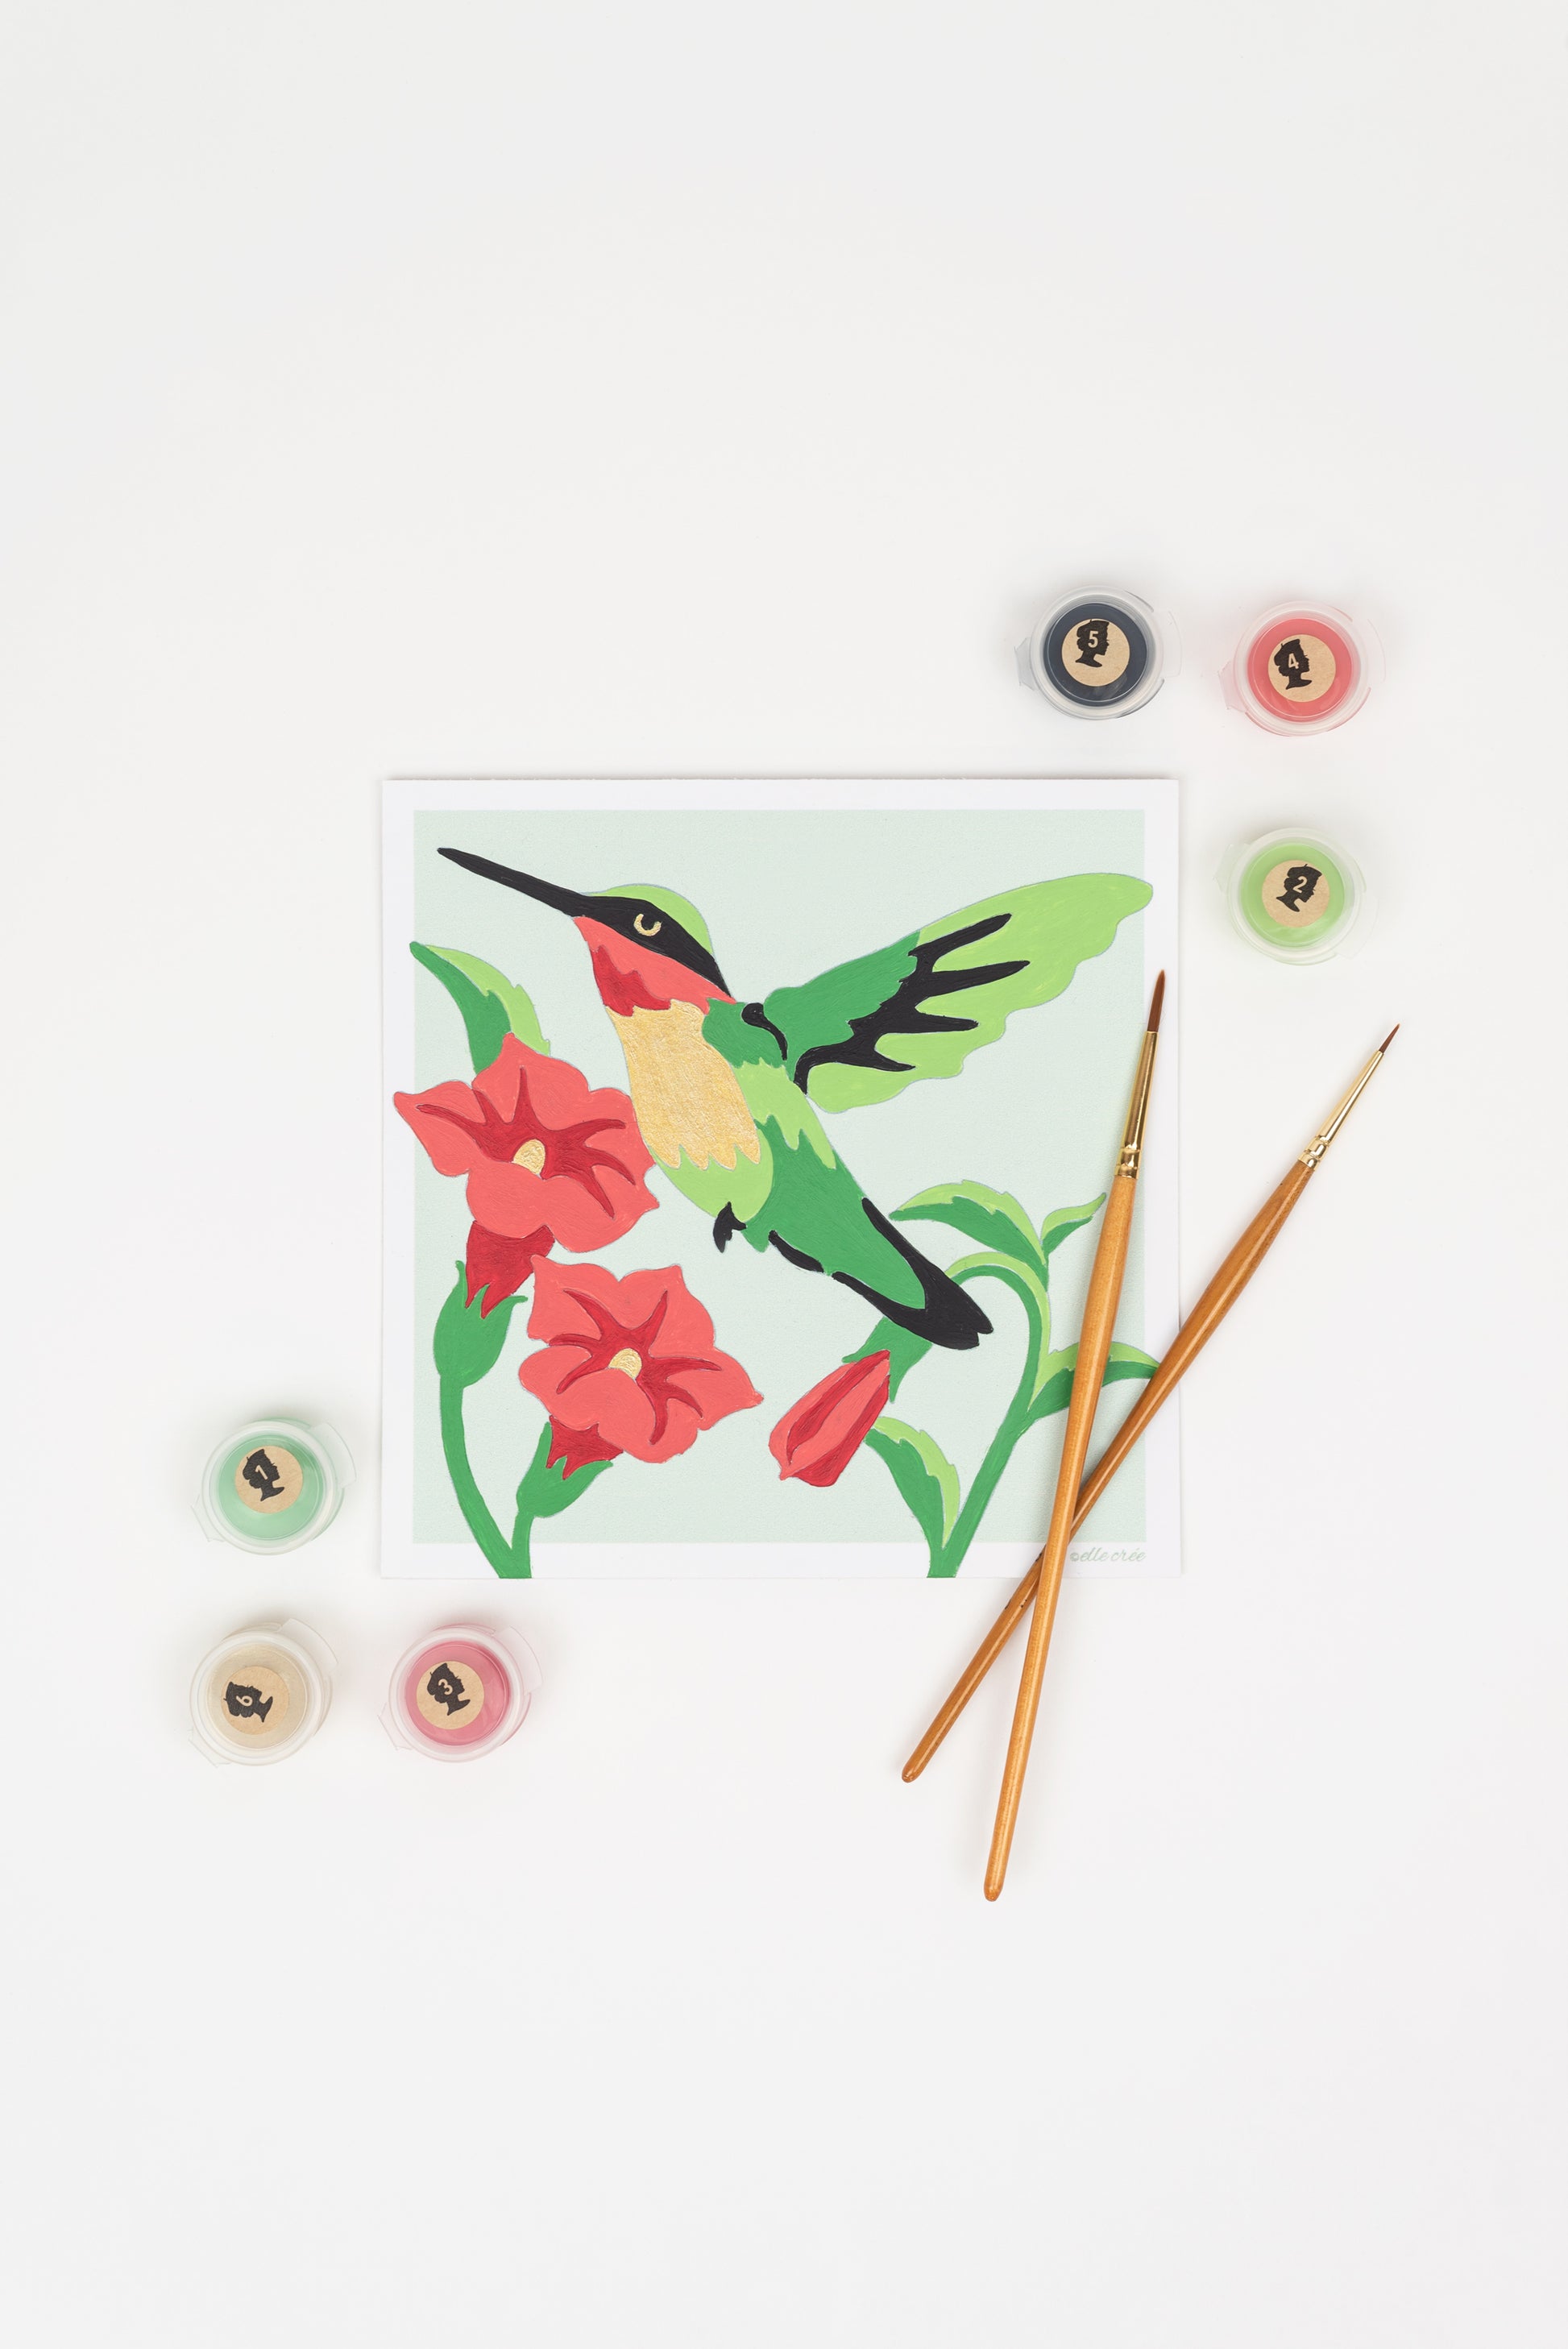 Hummingbird | 6x6 mini paint-by-number kit - Elle Crée